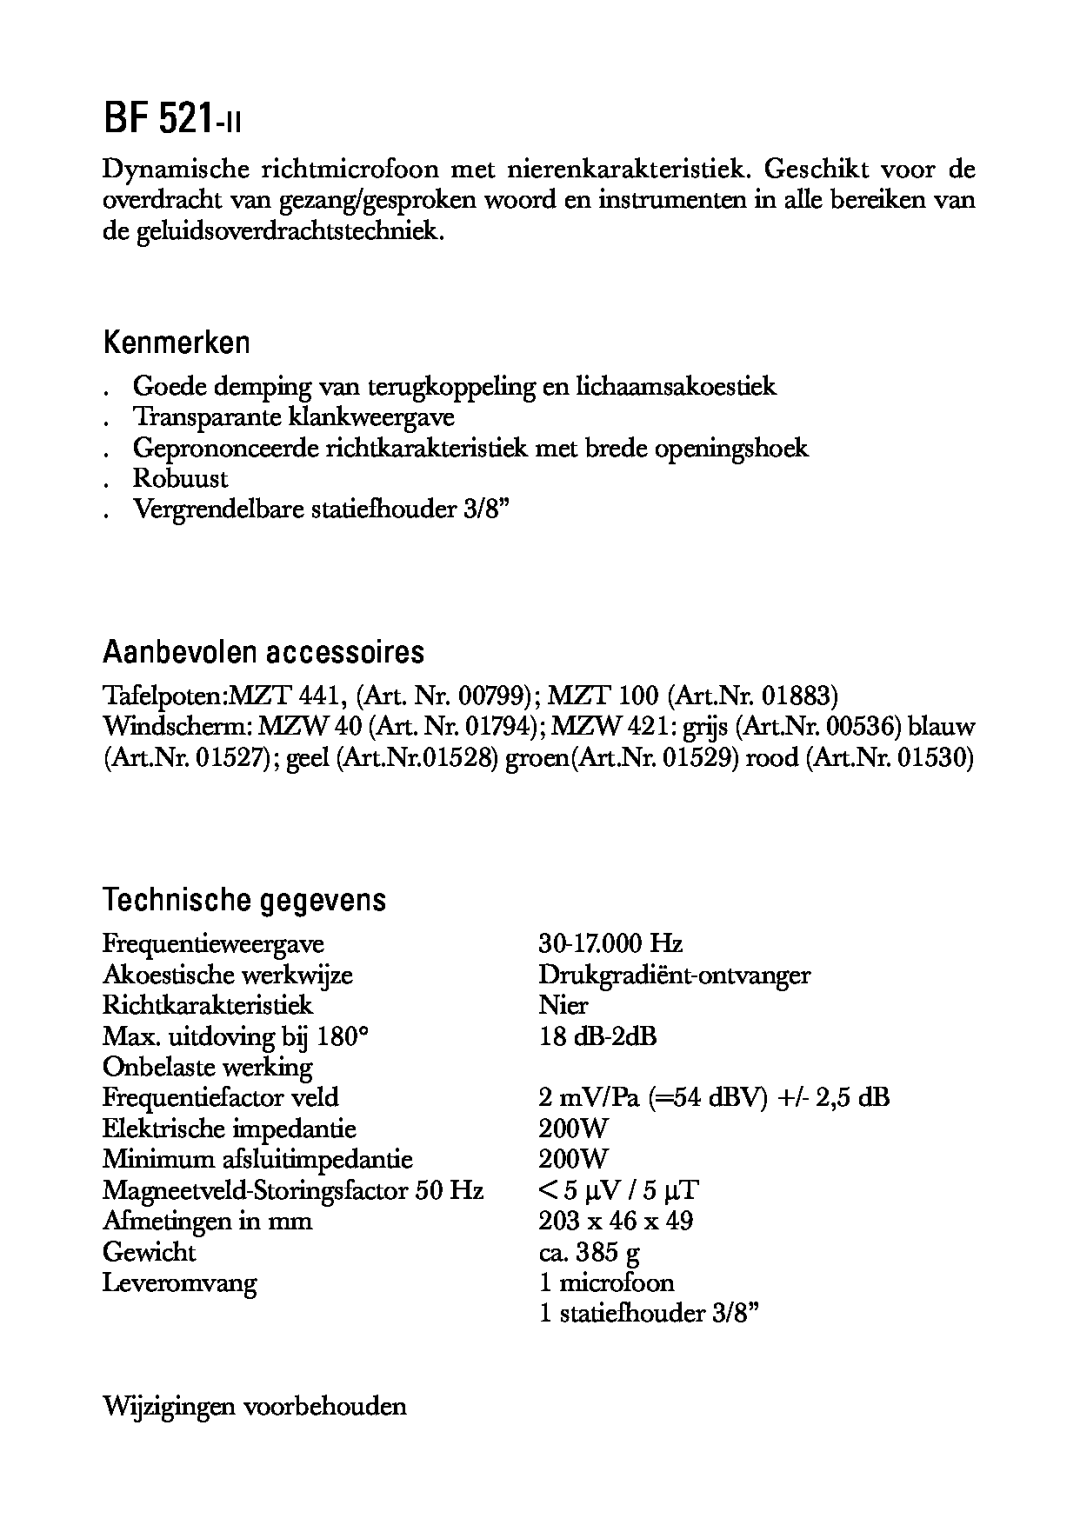 Sennheiser BF 521-II manual Kenmerken, Aanbevolen accessoires, Technische gegevens 